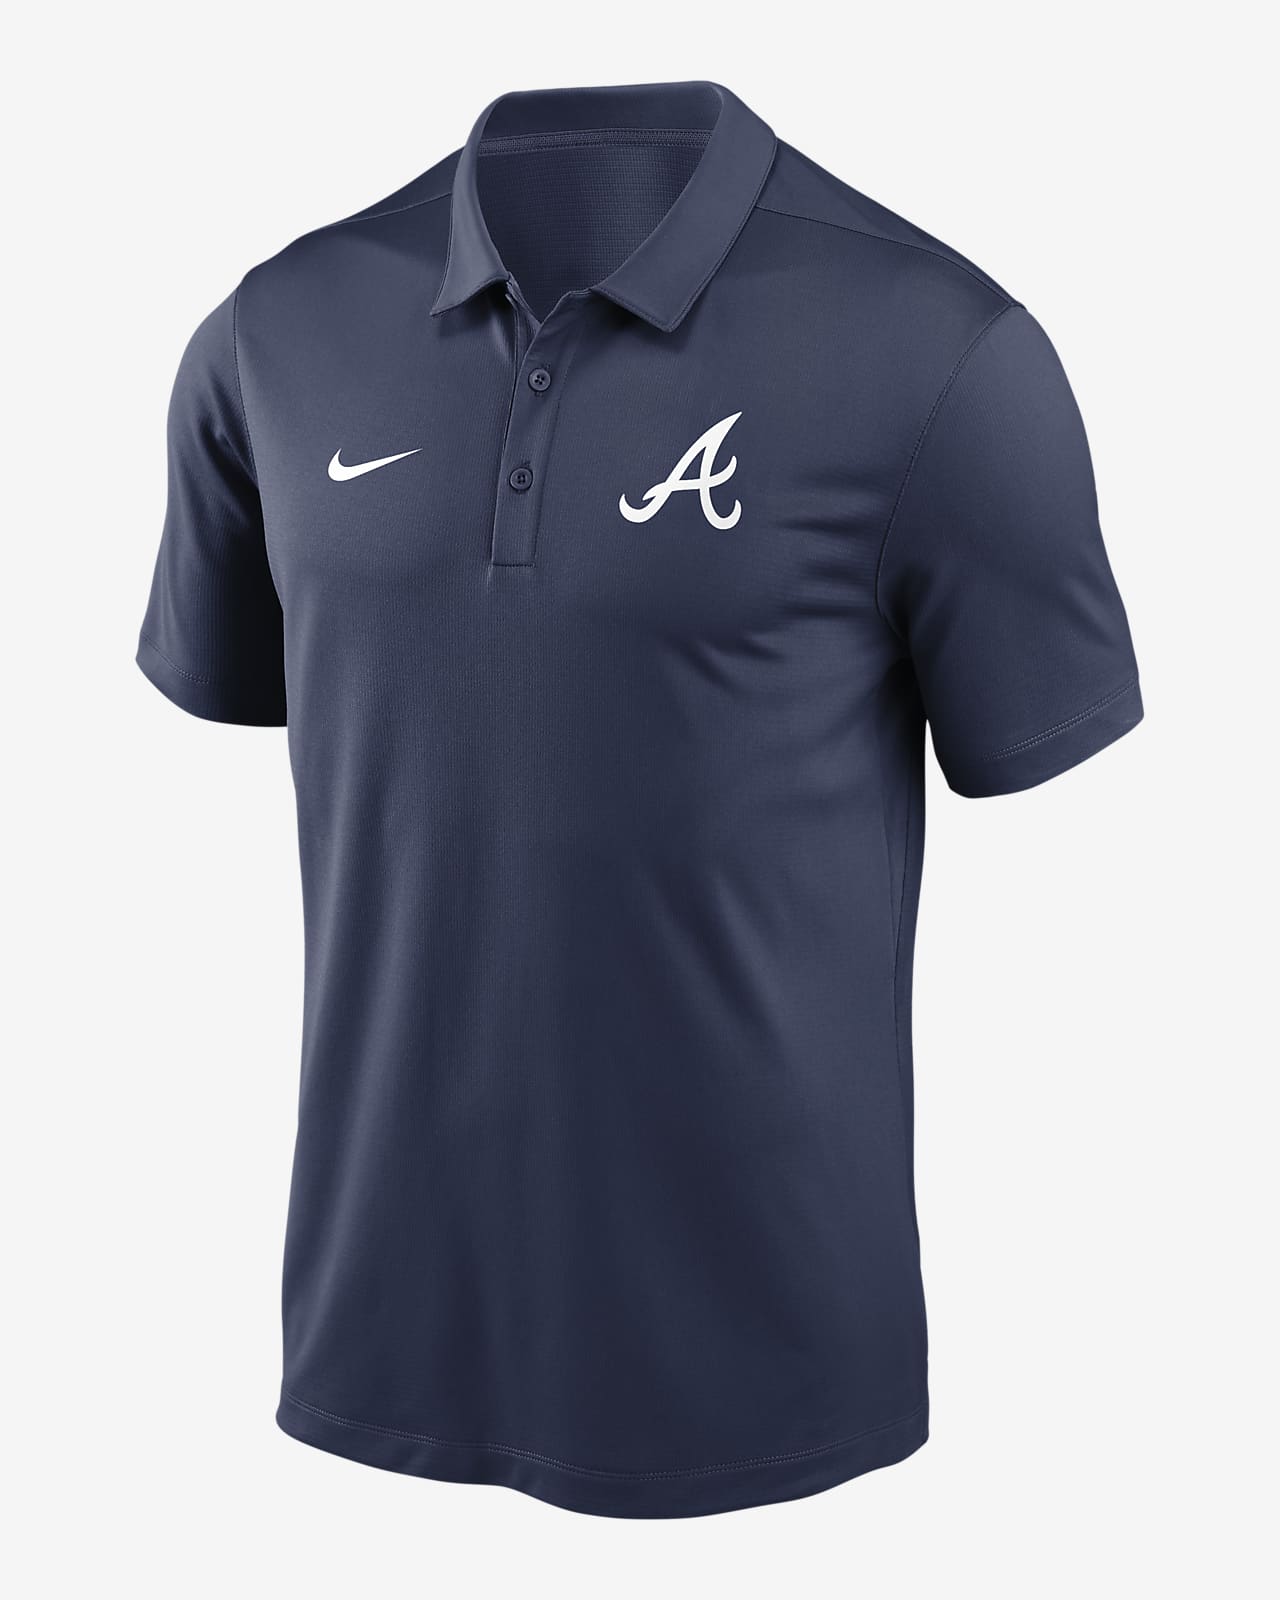 Men's Navy Atlanta Braves Button-Up Baseball Jersey 